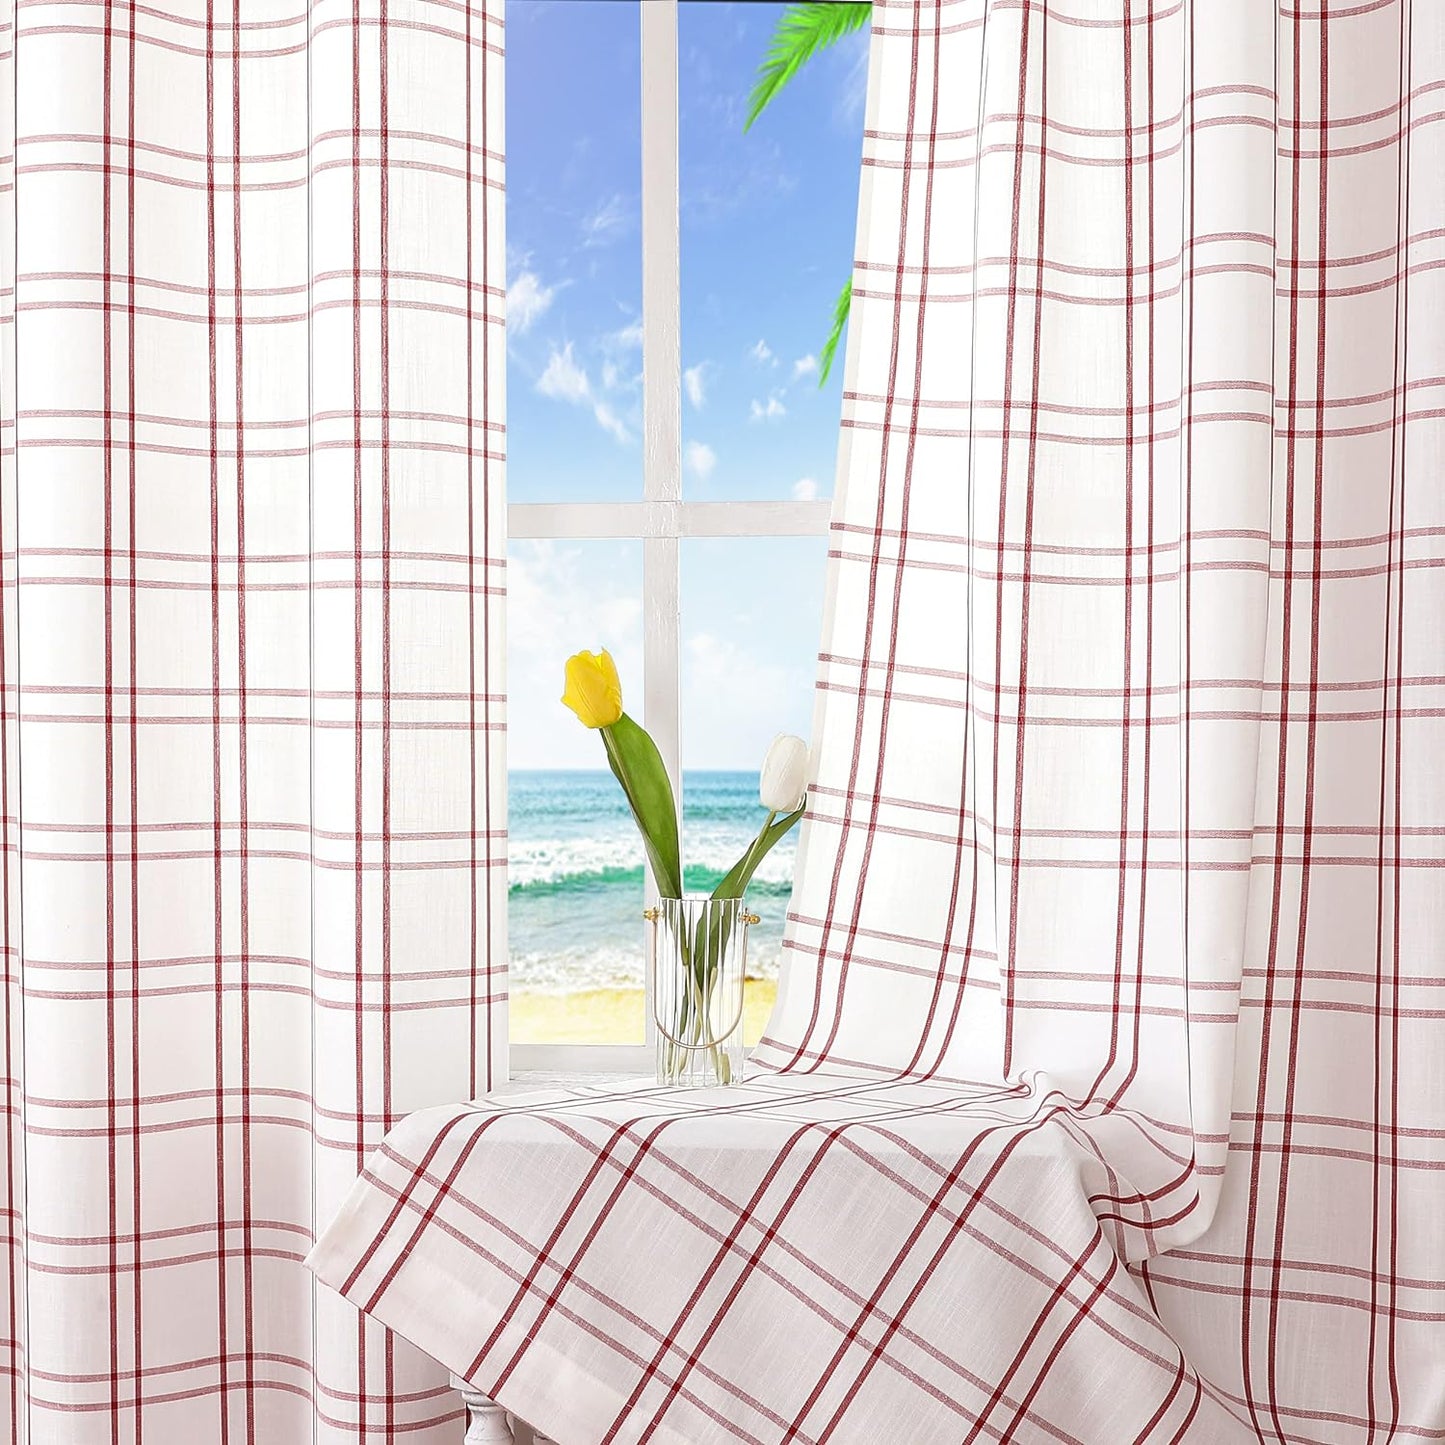 Amzdecor Plaid Window Treatment Set,Light Filtering Curtain Woven Lines Pattern Drapes for Living Room and Bedroom, Semi Sheer Rod Pocket Modern Farmhouse Style 2 Panels 40"X84",Liene&White.  Amzdecor Red 40"X63"X2 